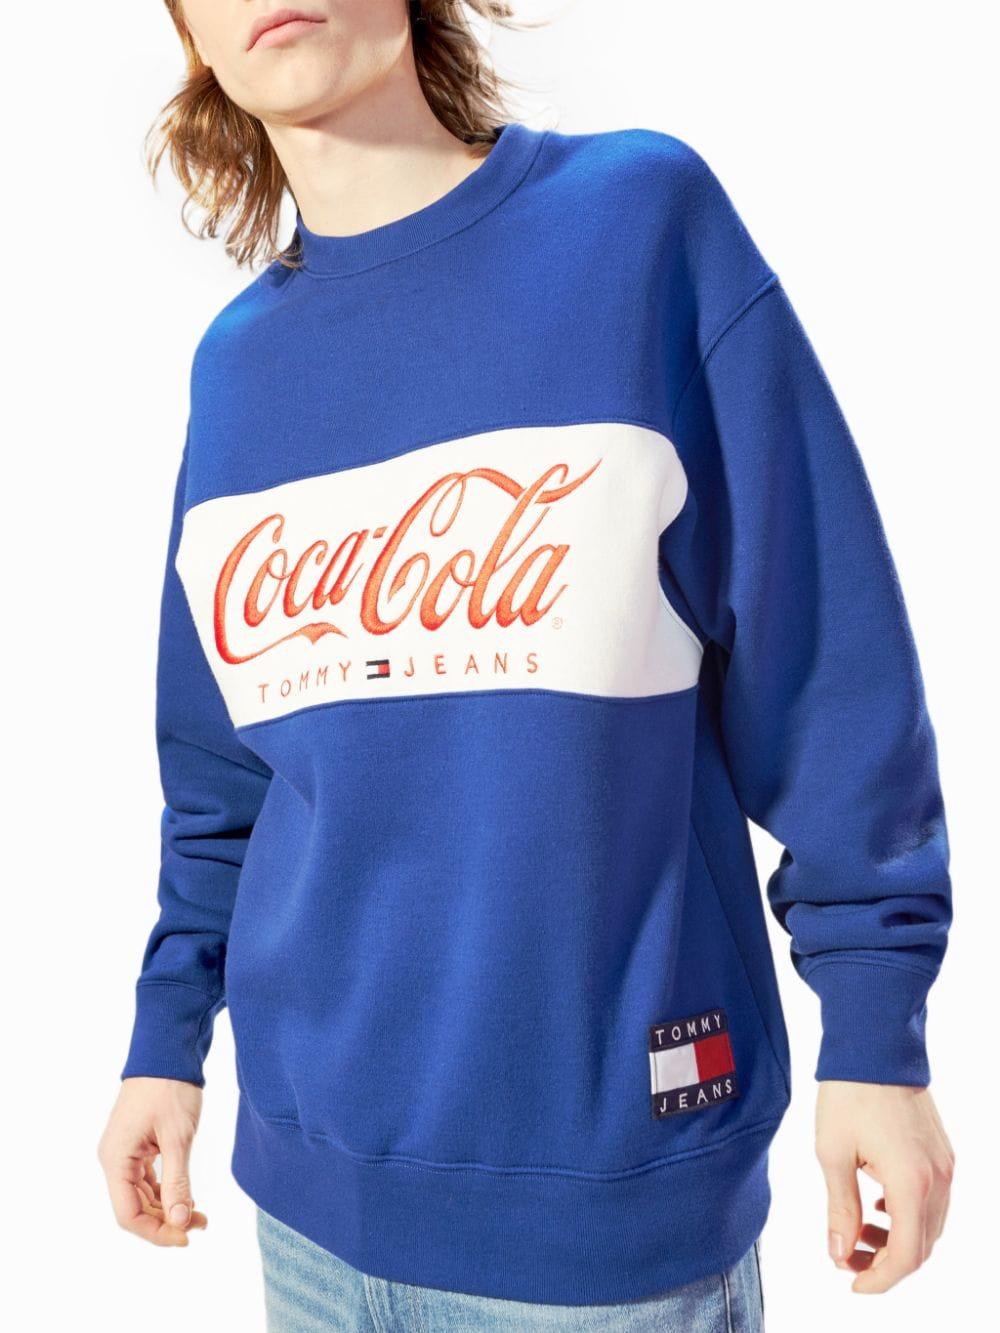 Tommy Hilfiger Denim X Coca-cola Crew Sweat in Blue for Men | Lyst